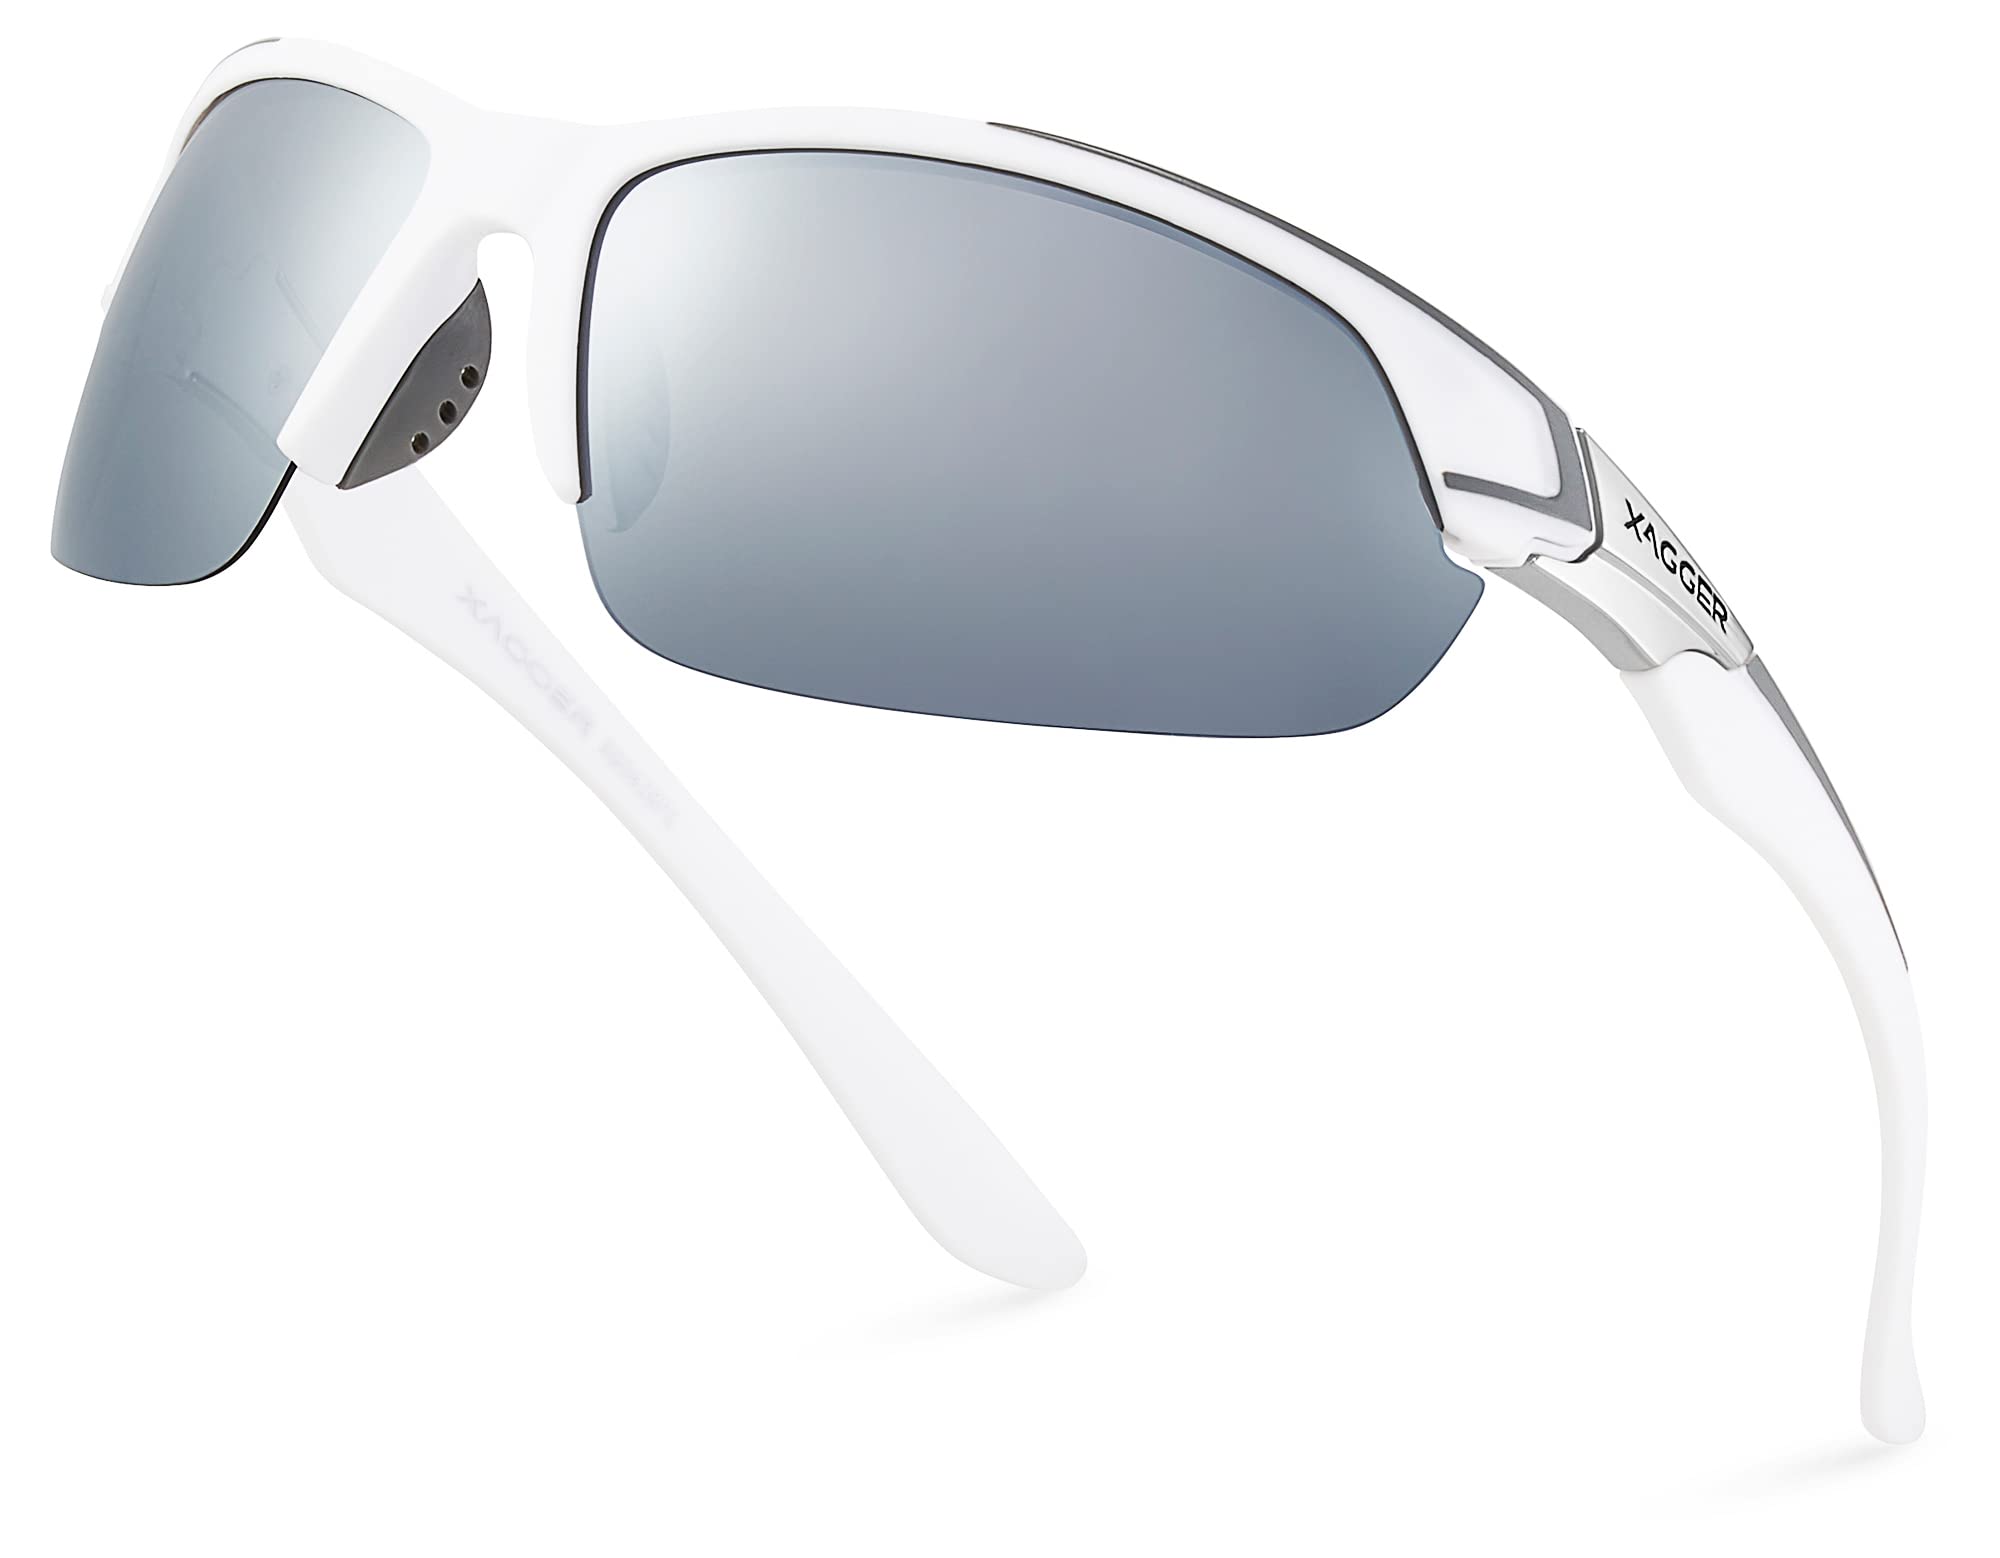 Xagger Polarized Sports Sunglasses for Men Women Algeria